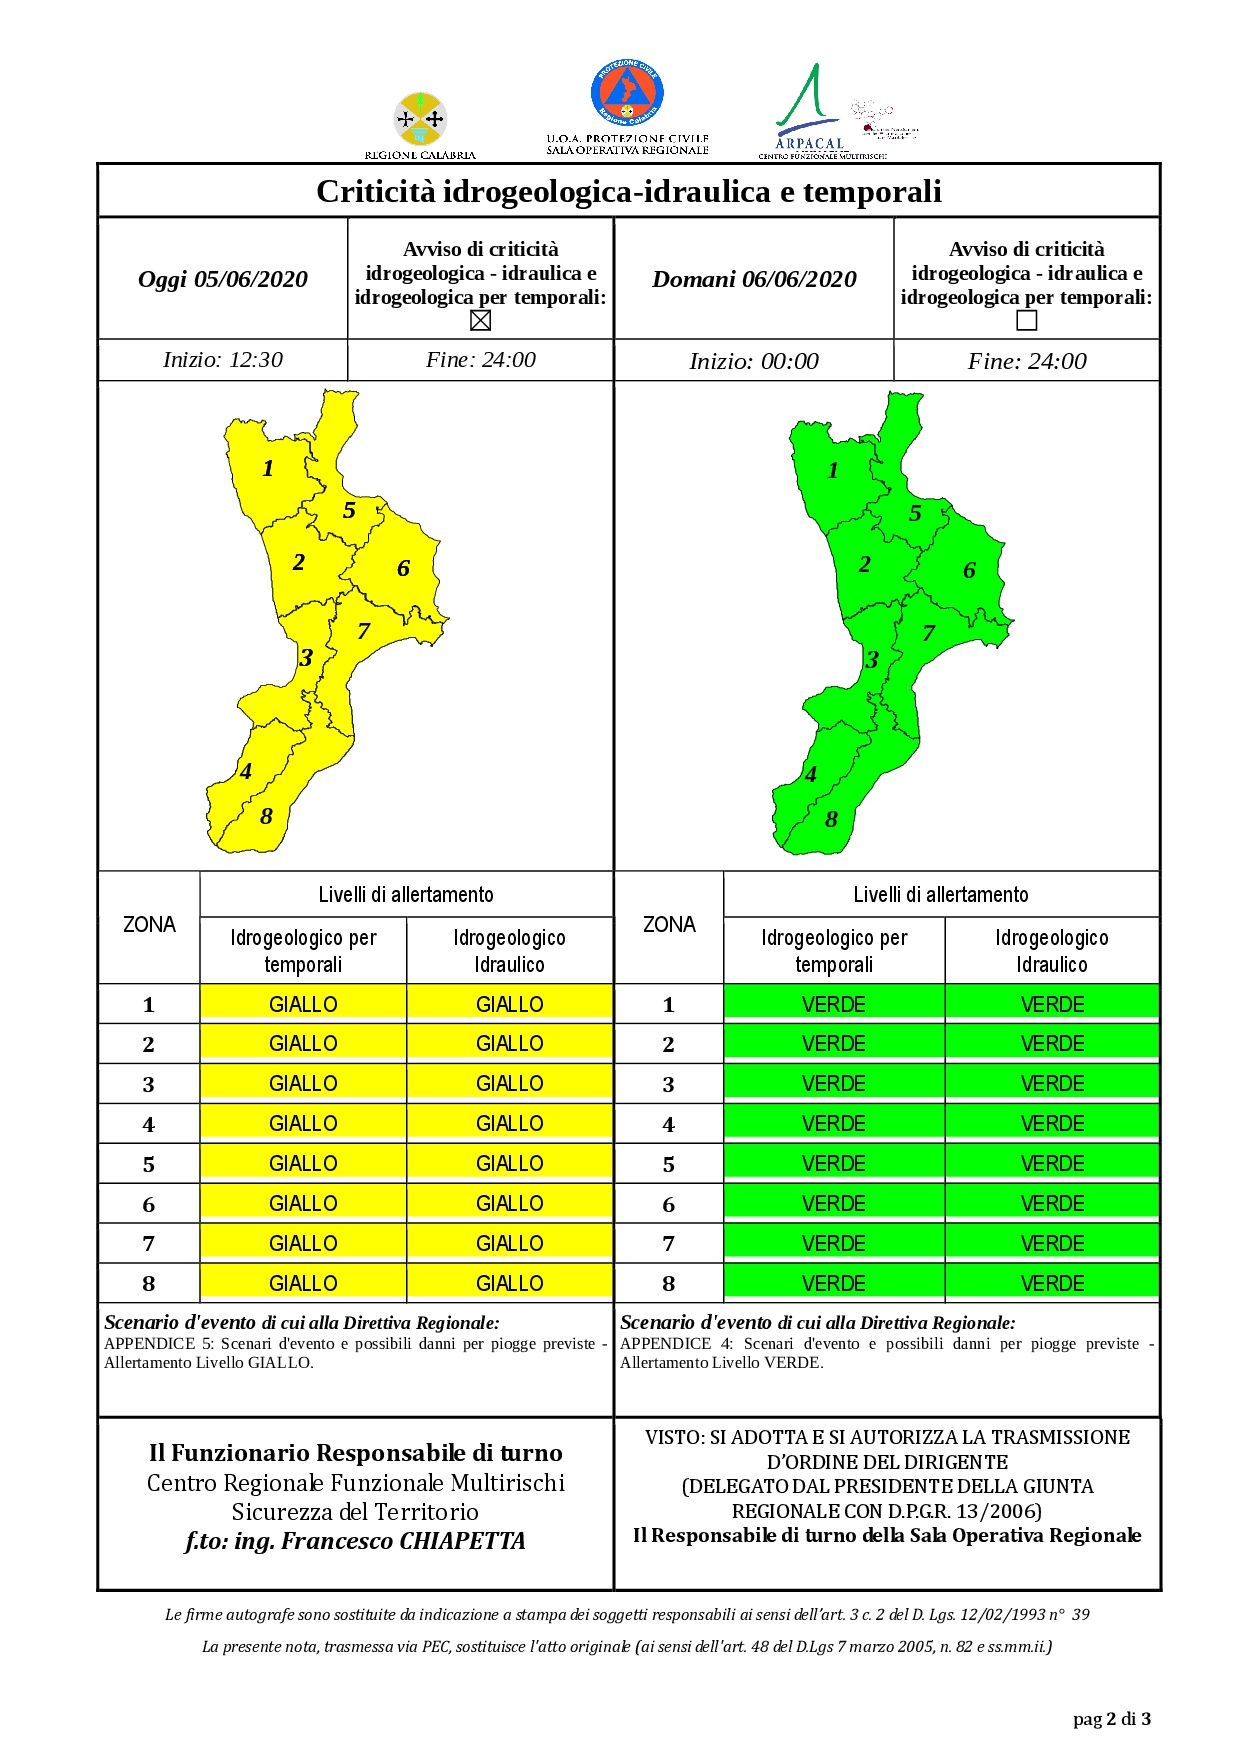 Criticità idrogeologica-idraulica e temporali in Calabria 05-06-2020